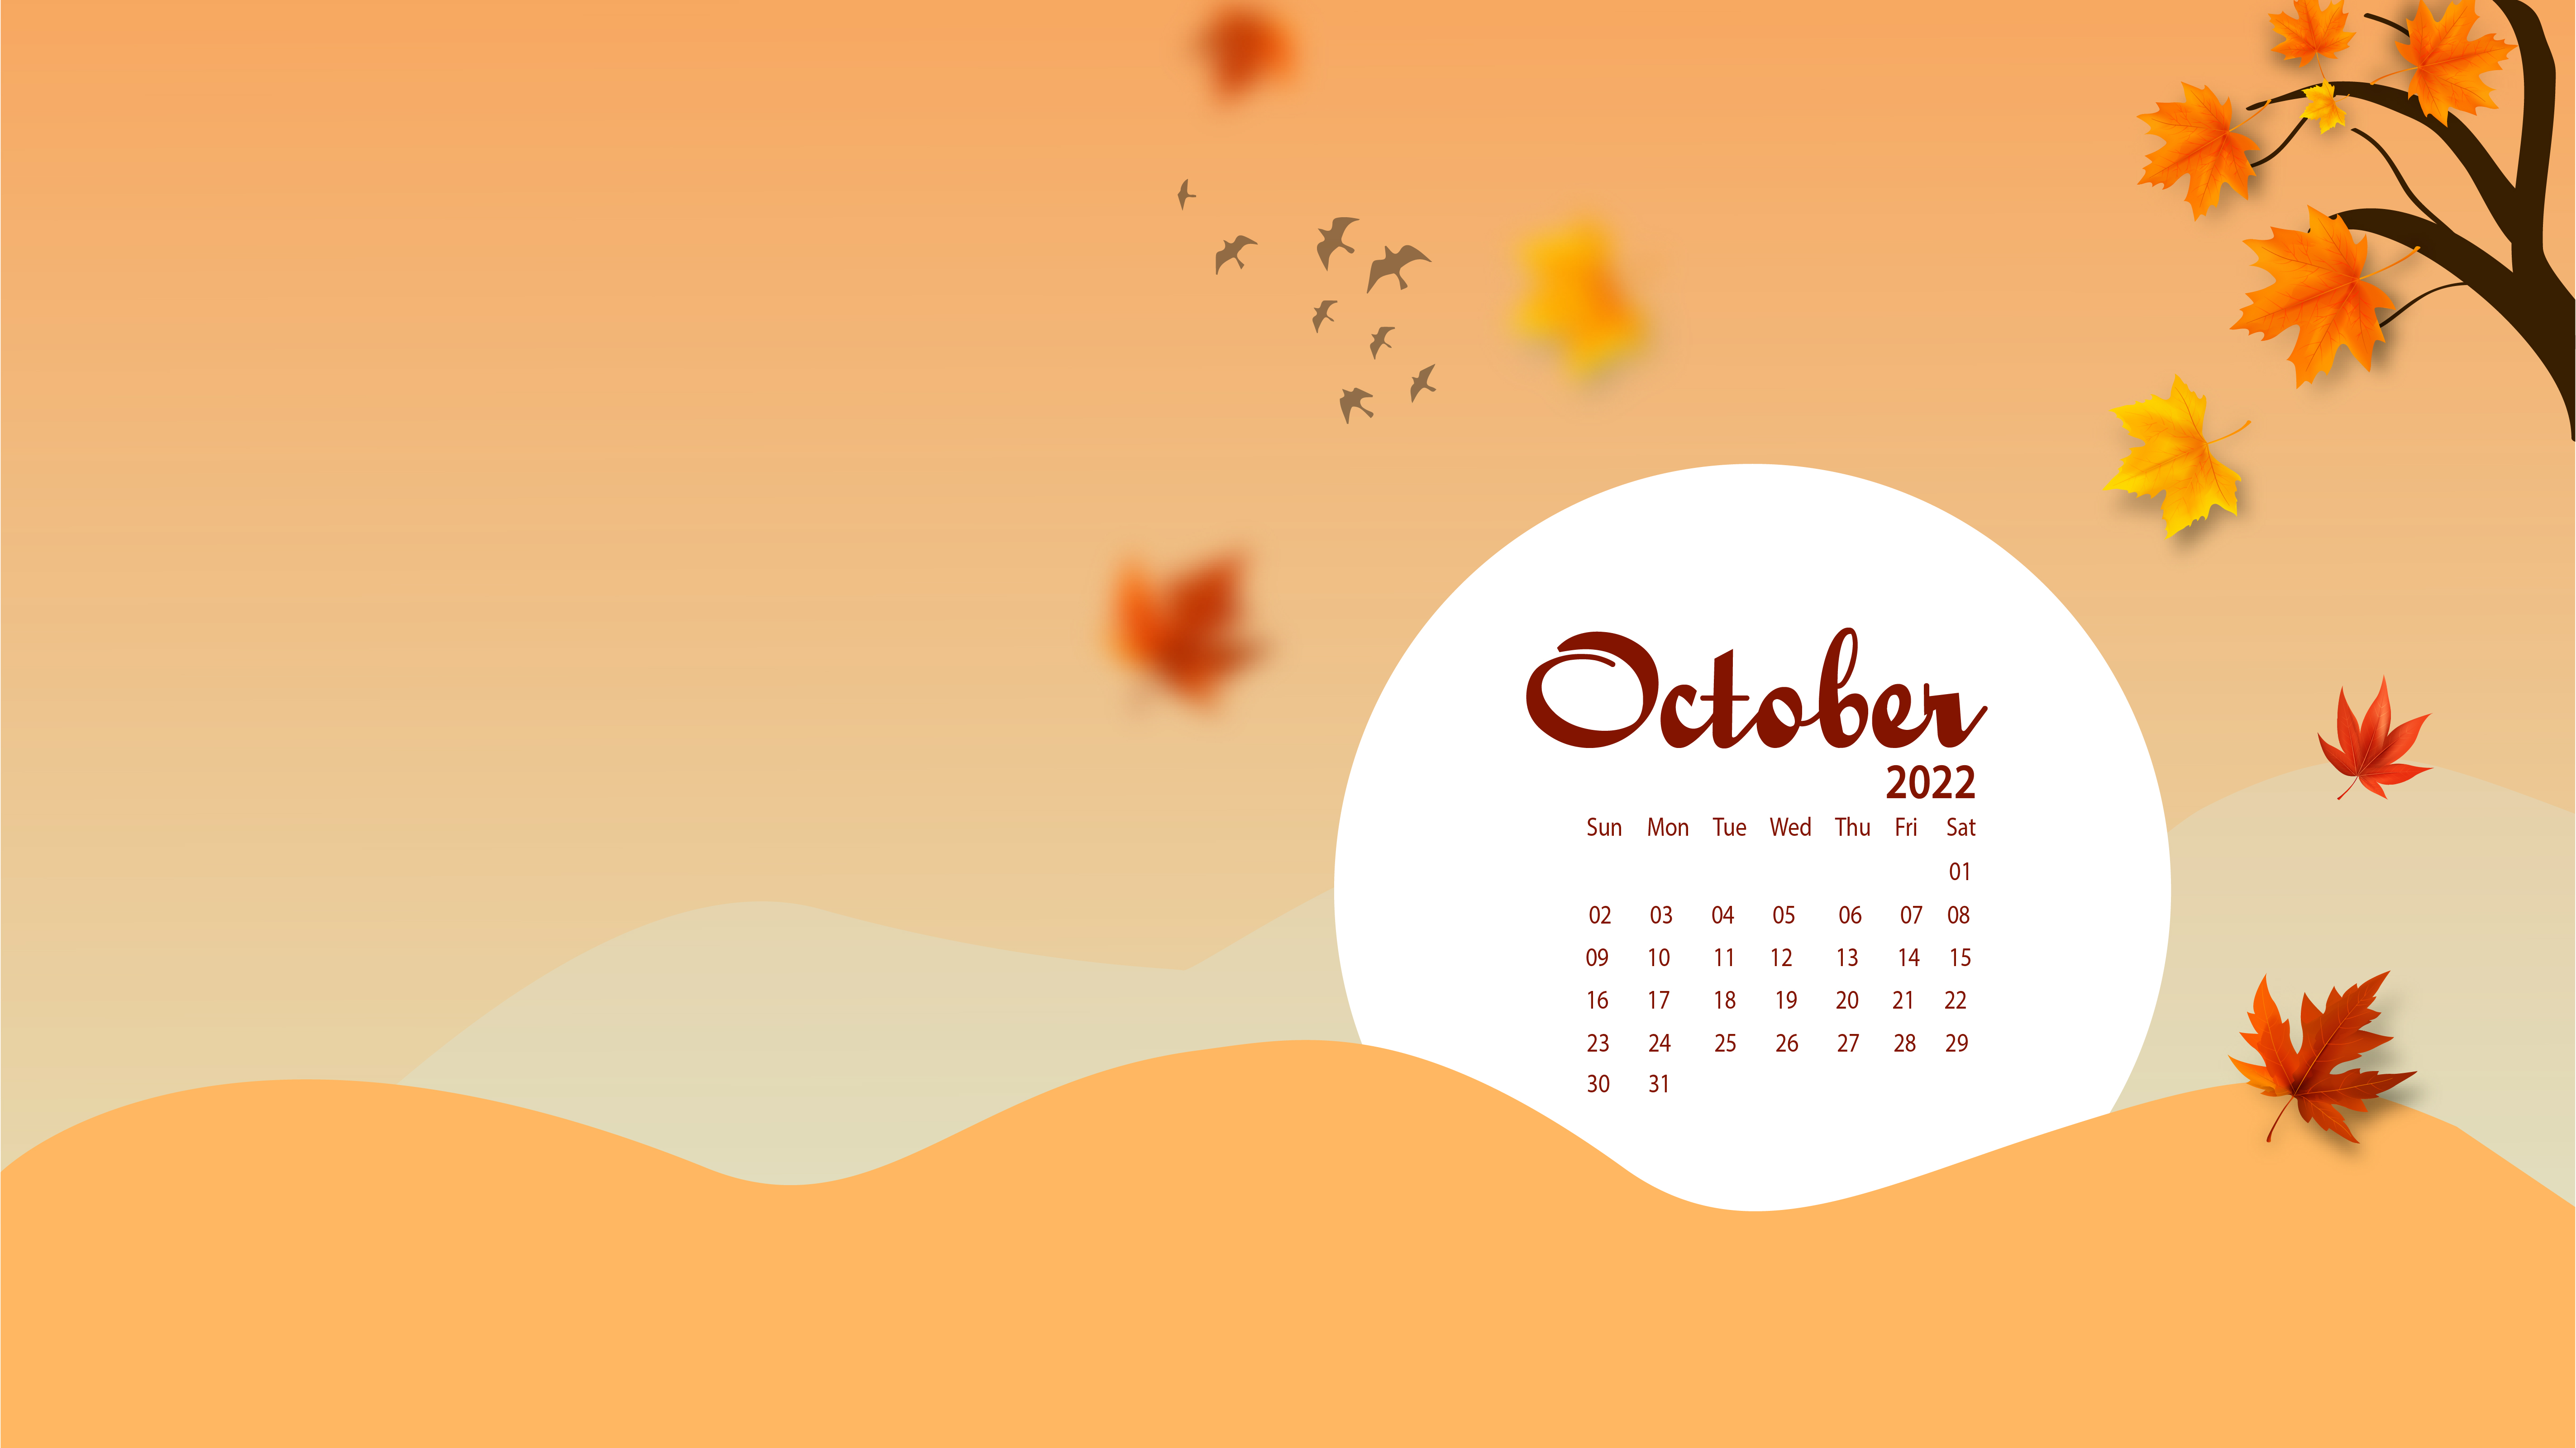 October 2022 Desktop Wallpaper Calendar - CalendarLabs